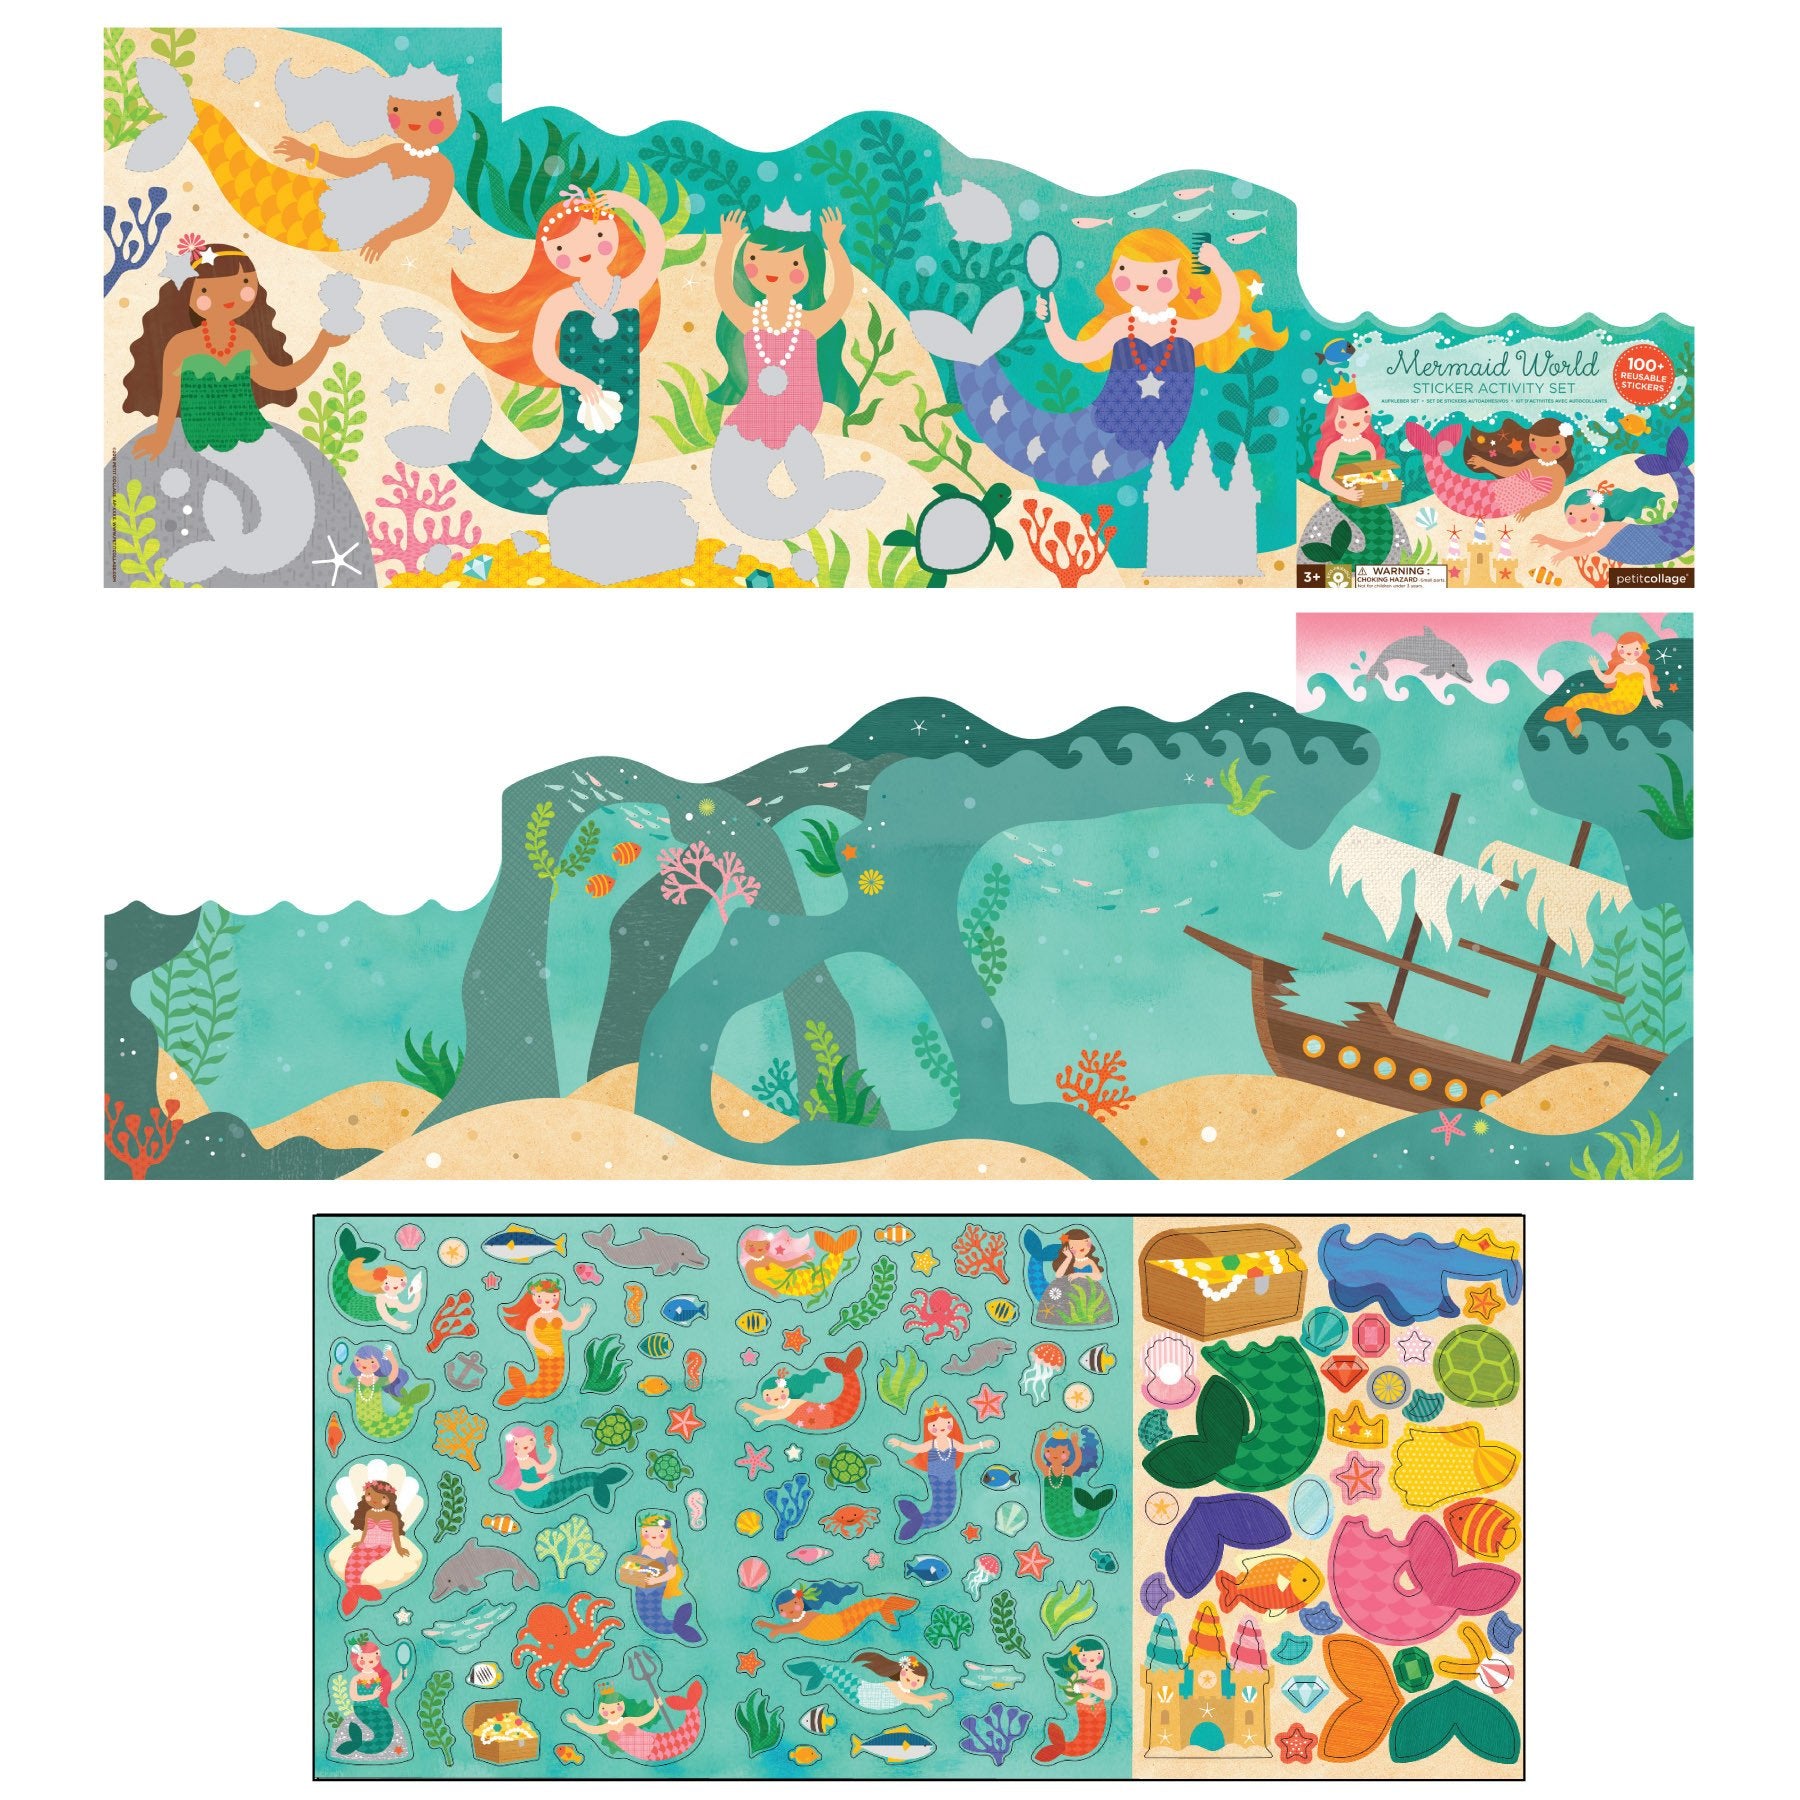 Sticker set - Mermaid World